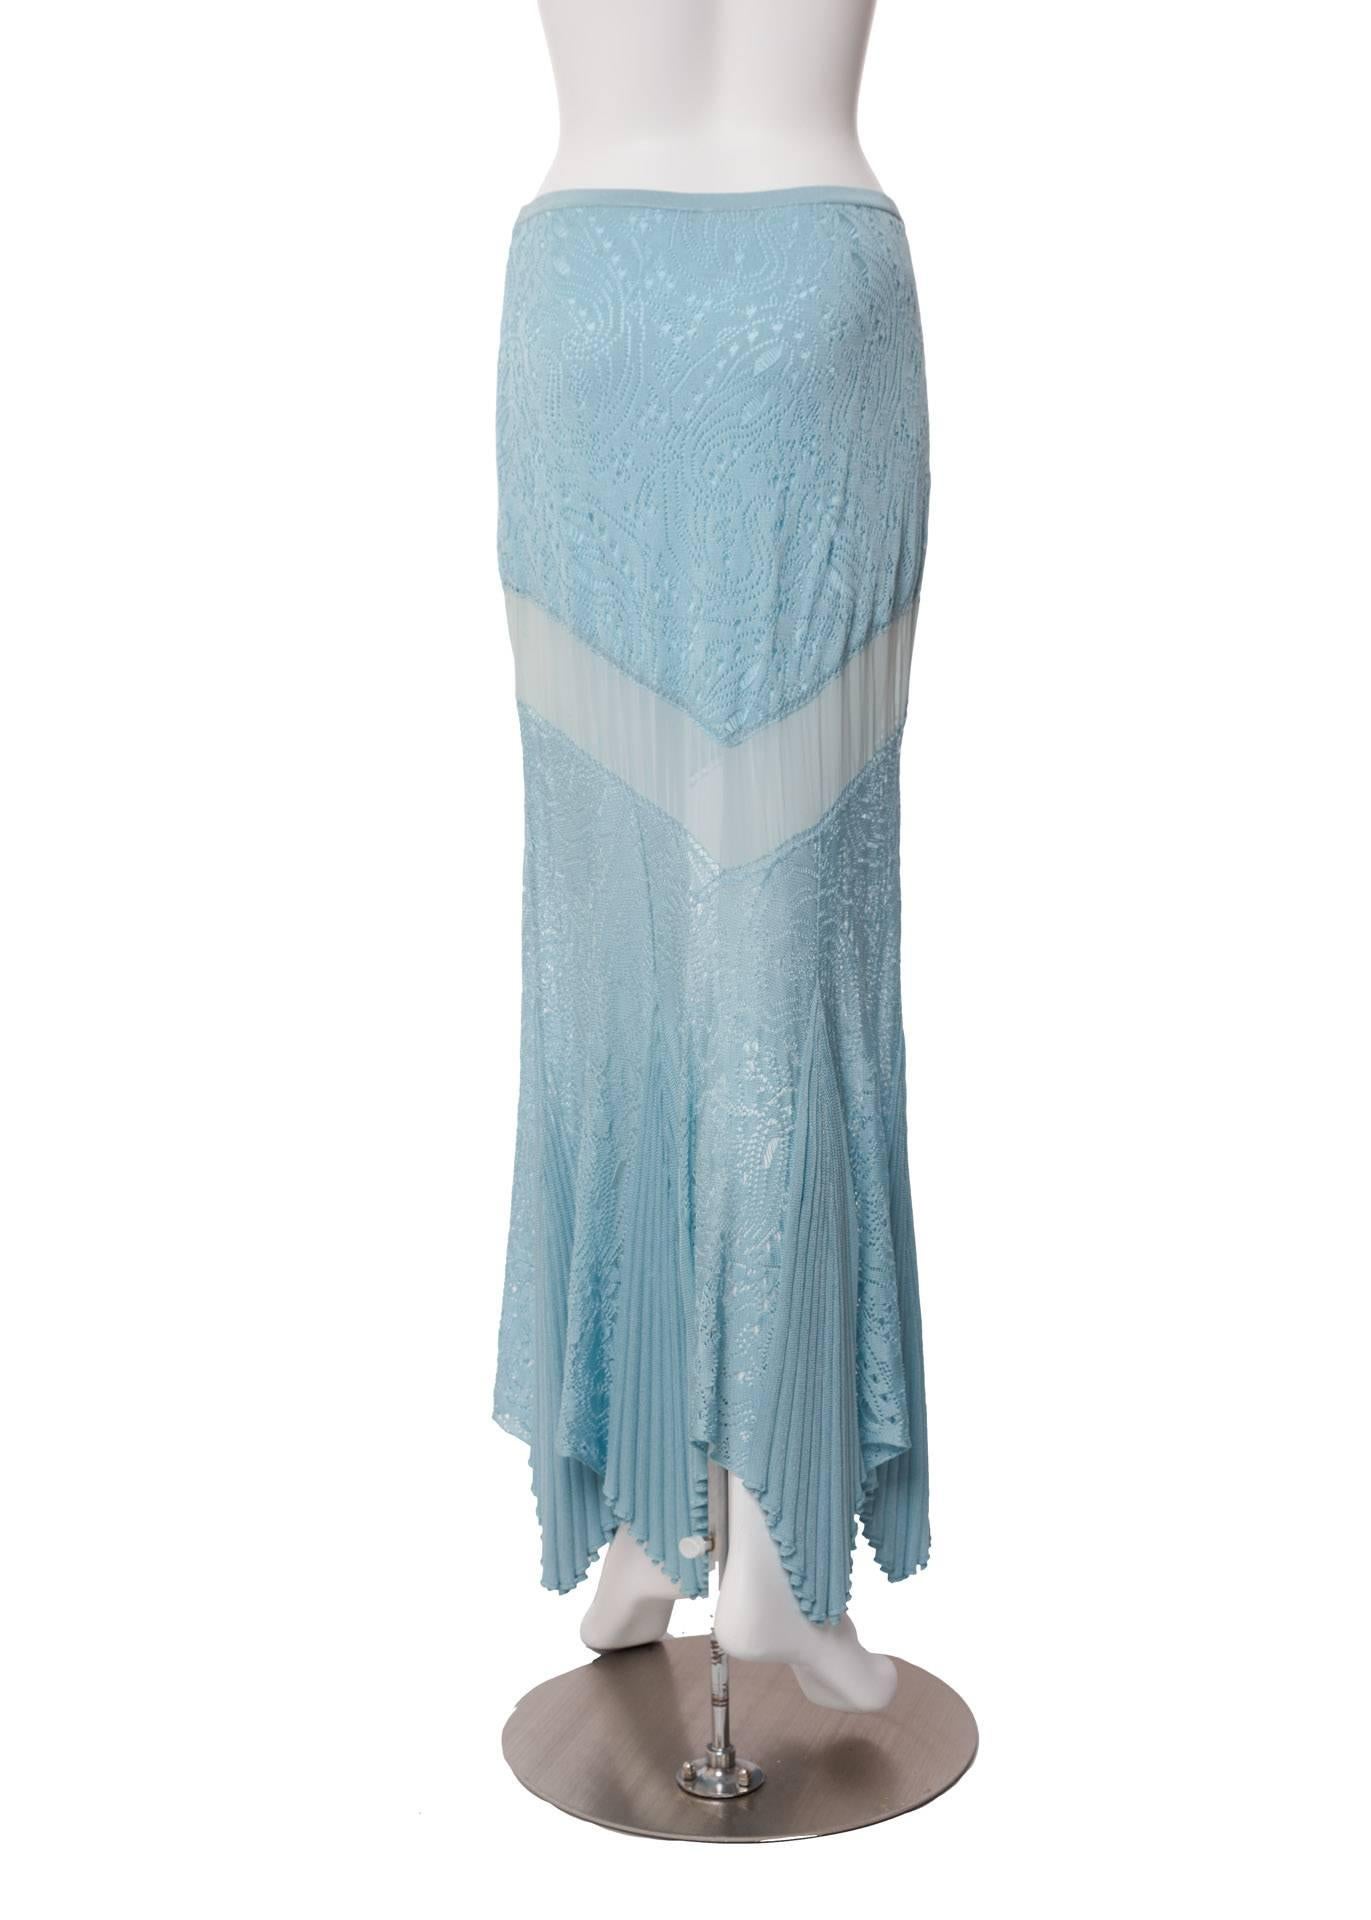 Women's Christian Dior by Galliano Powder Blue Knit Lace  Silk Inset Mermaid Skirt